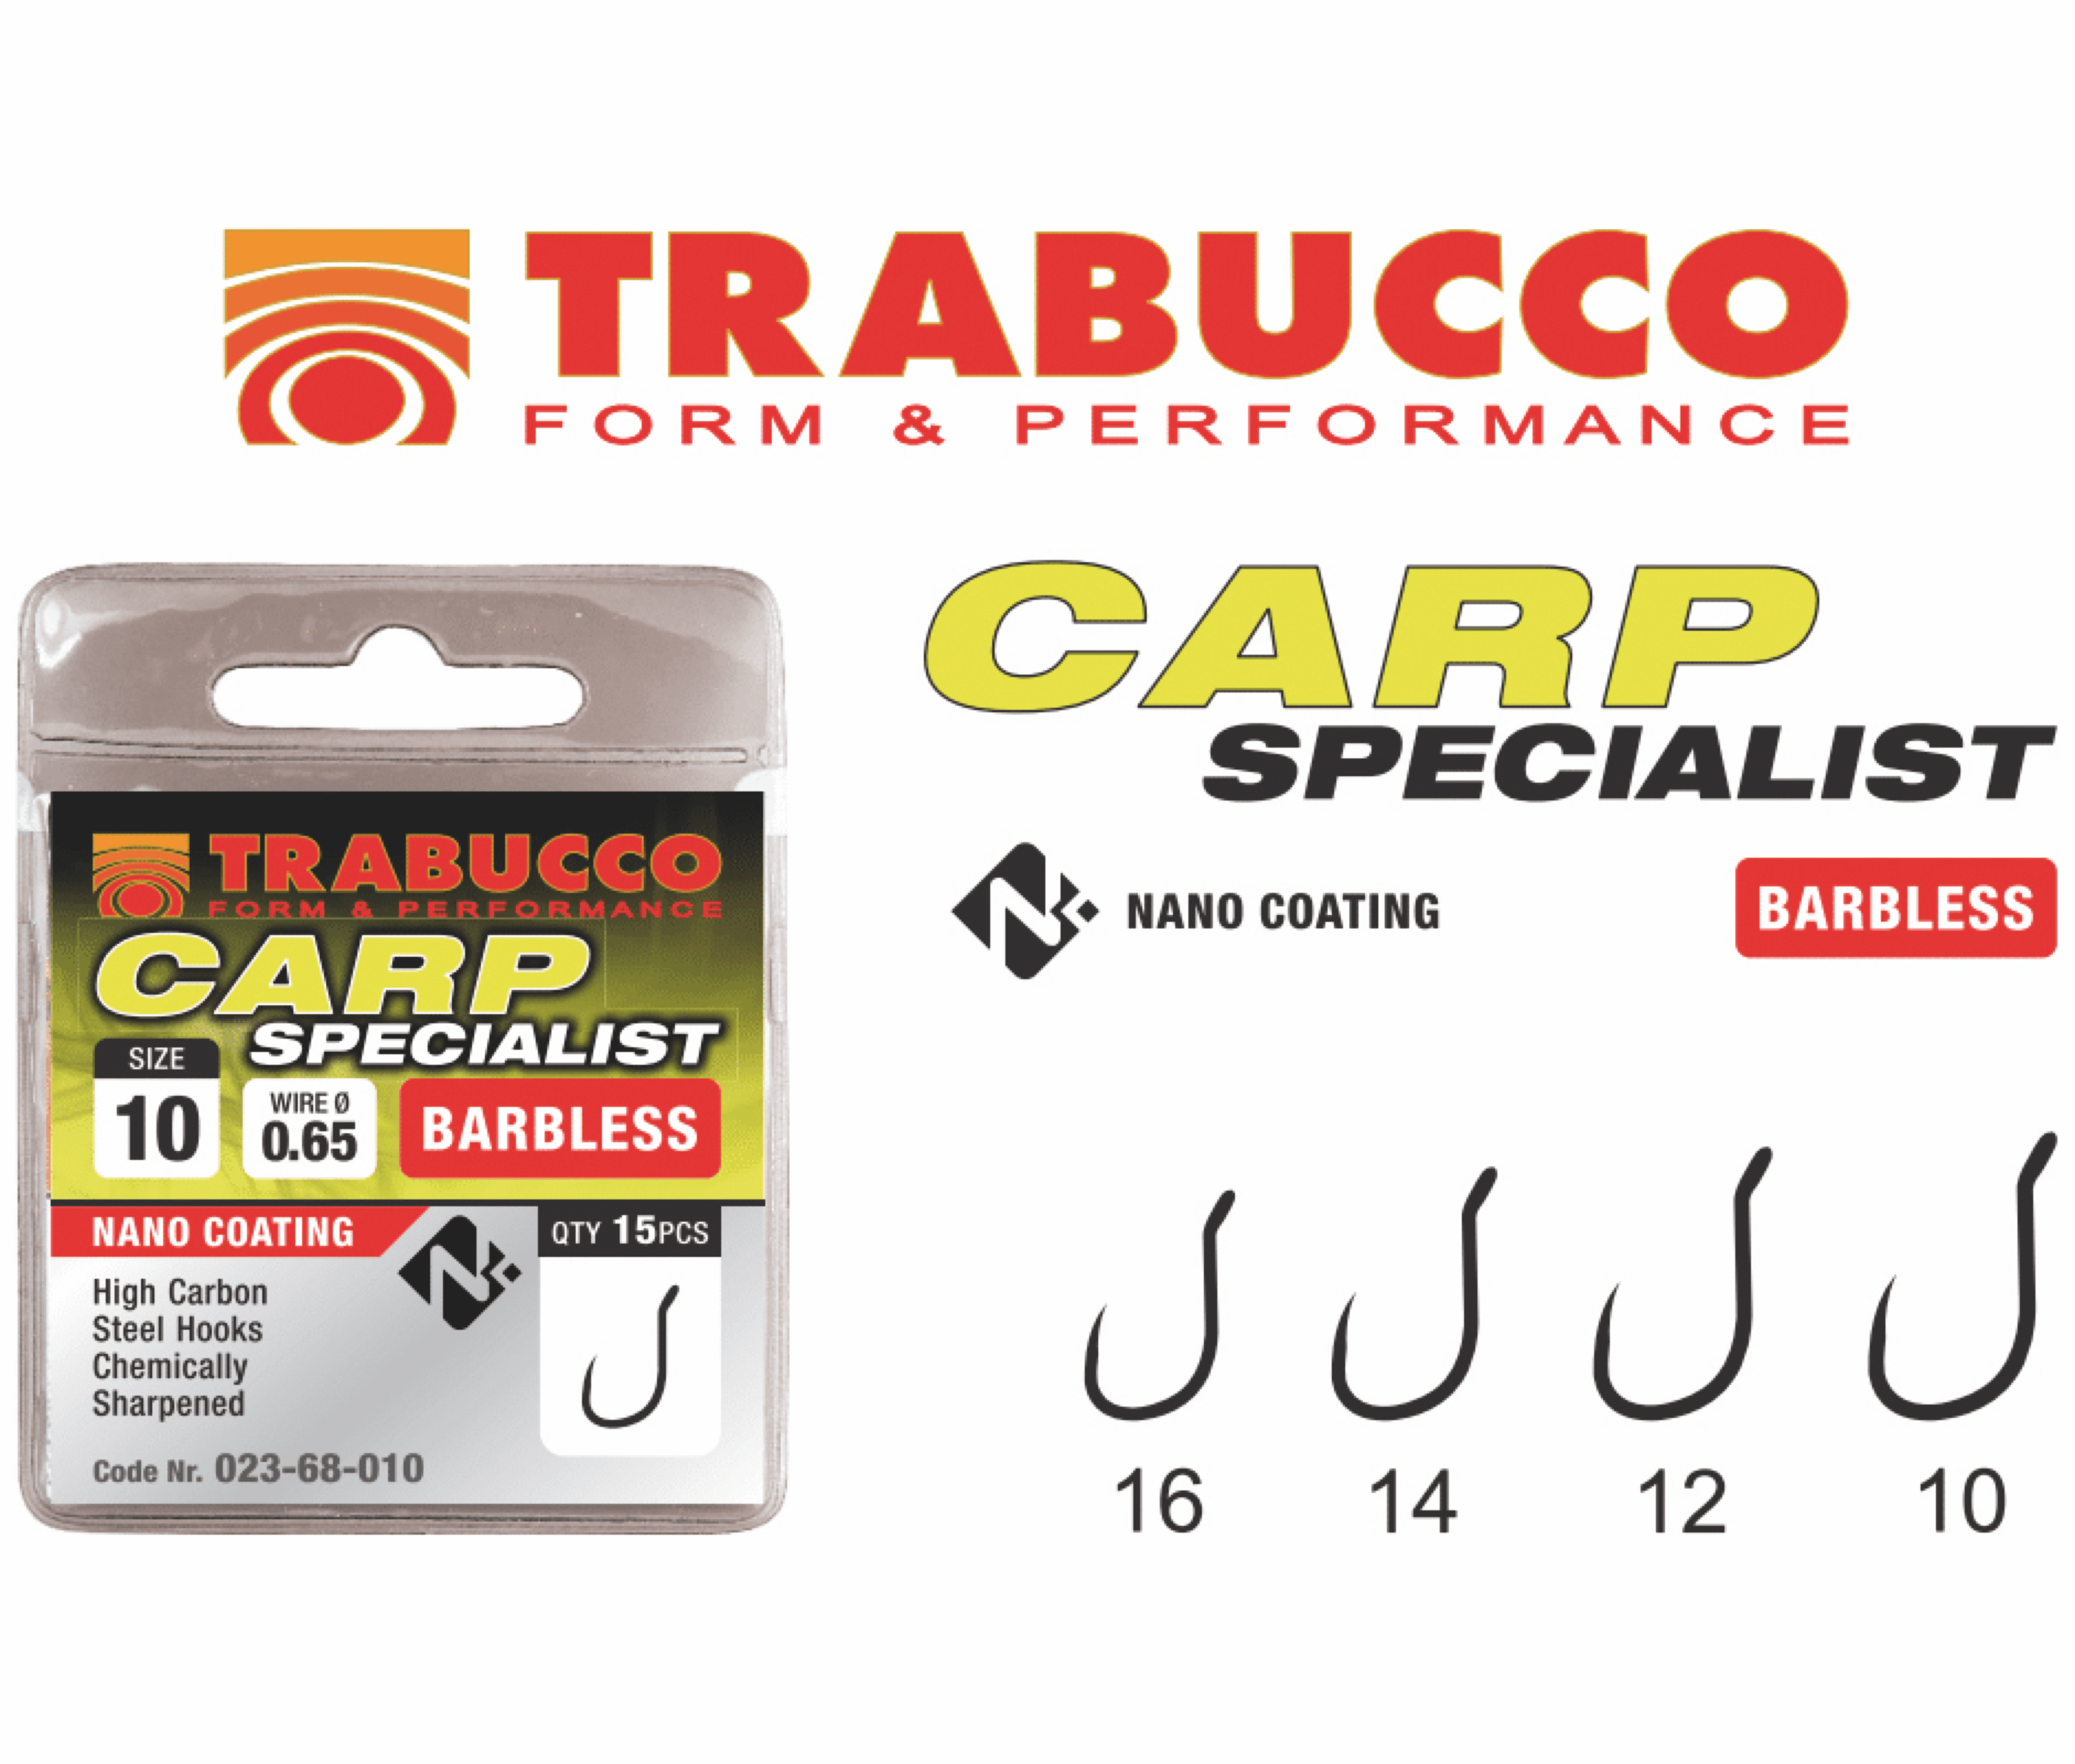 Trabucco carp specialist barbless eyed